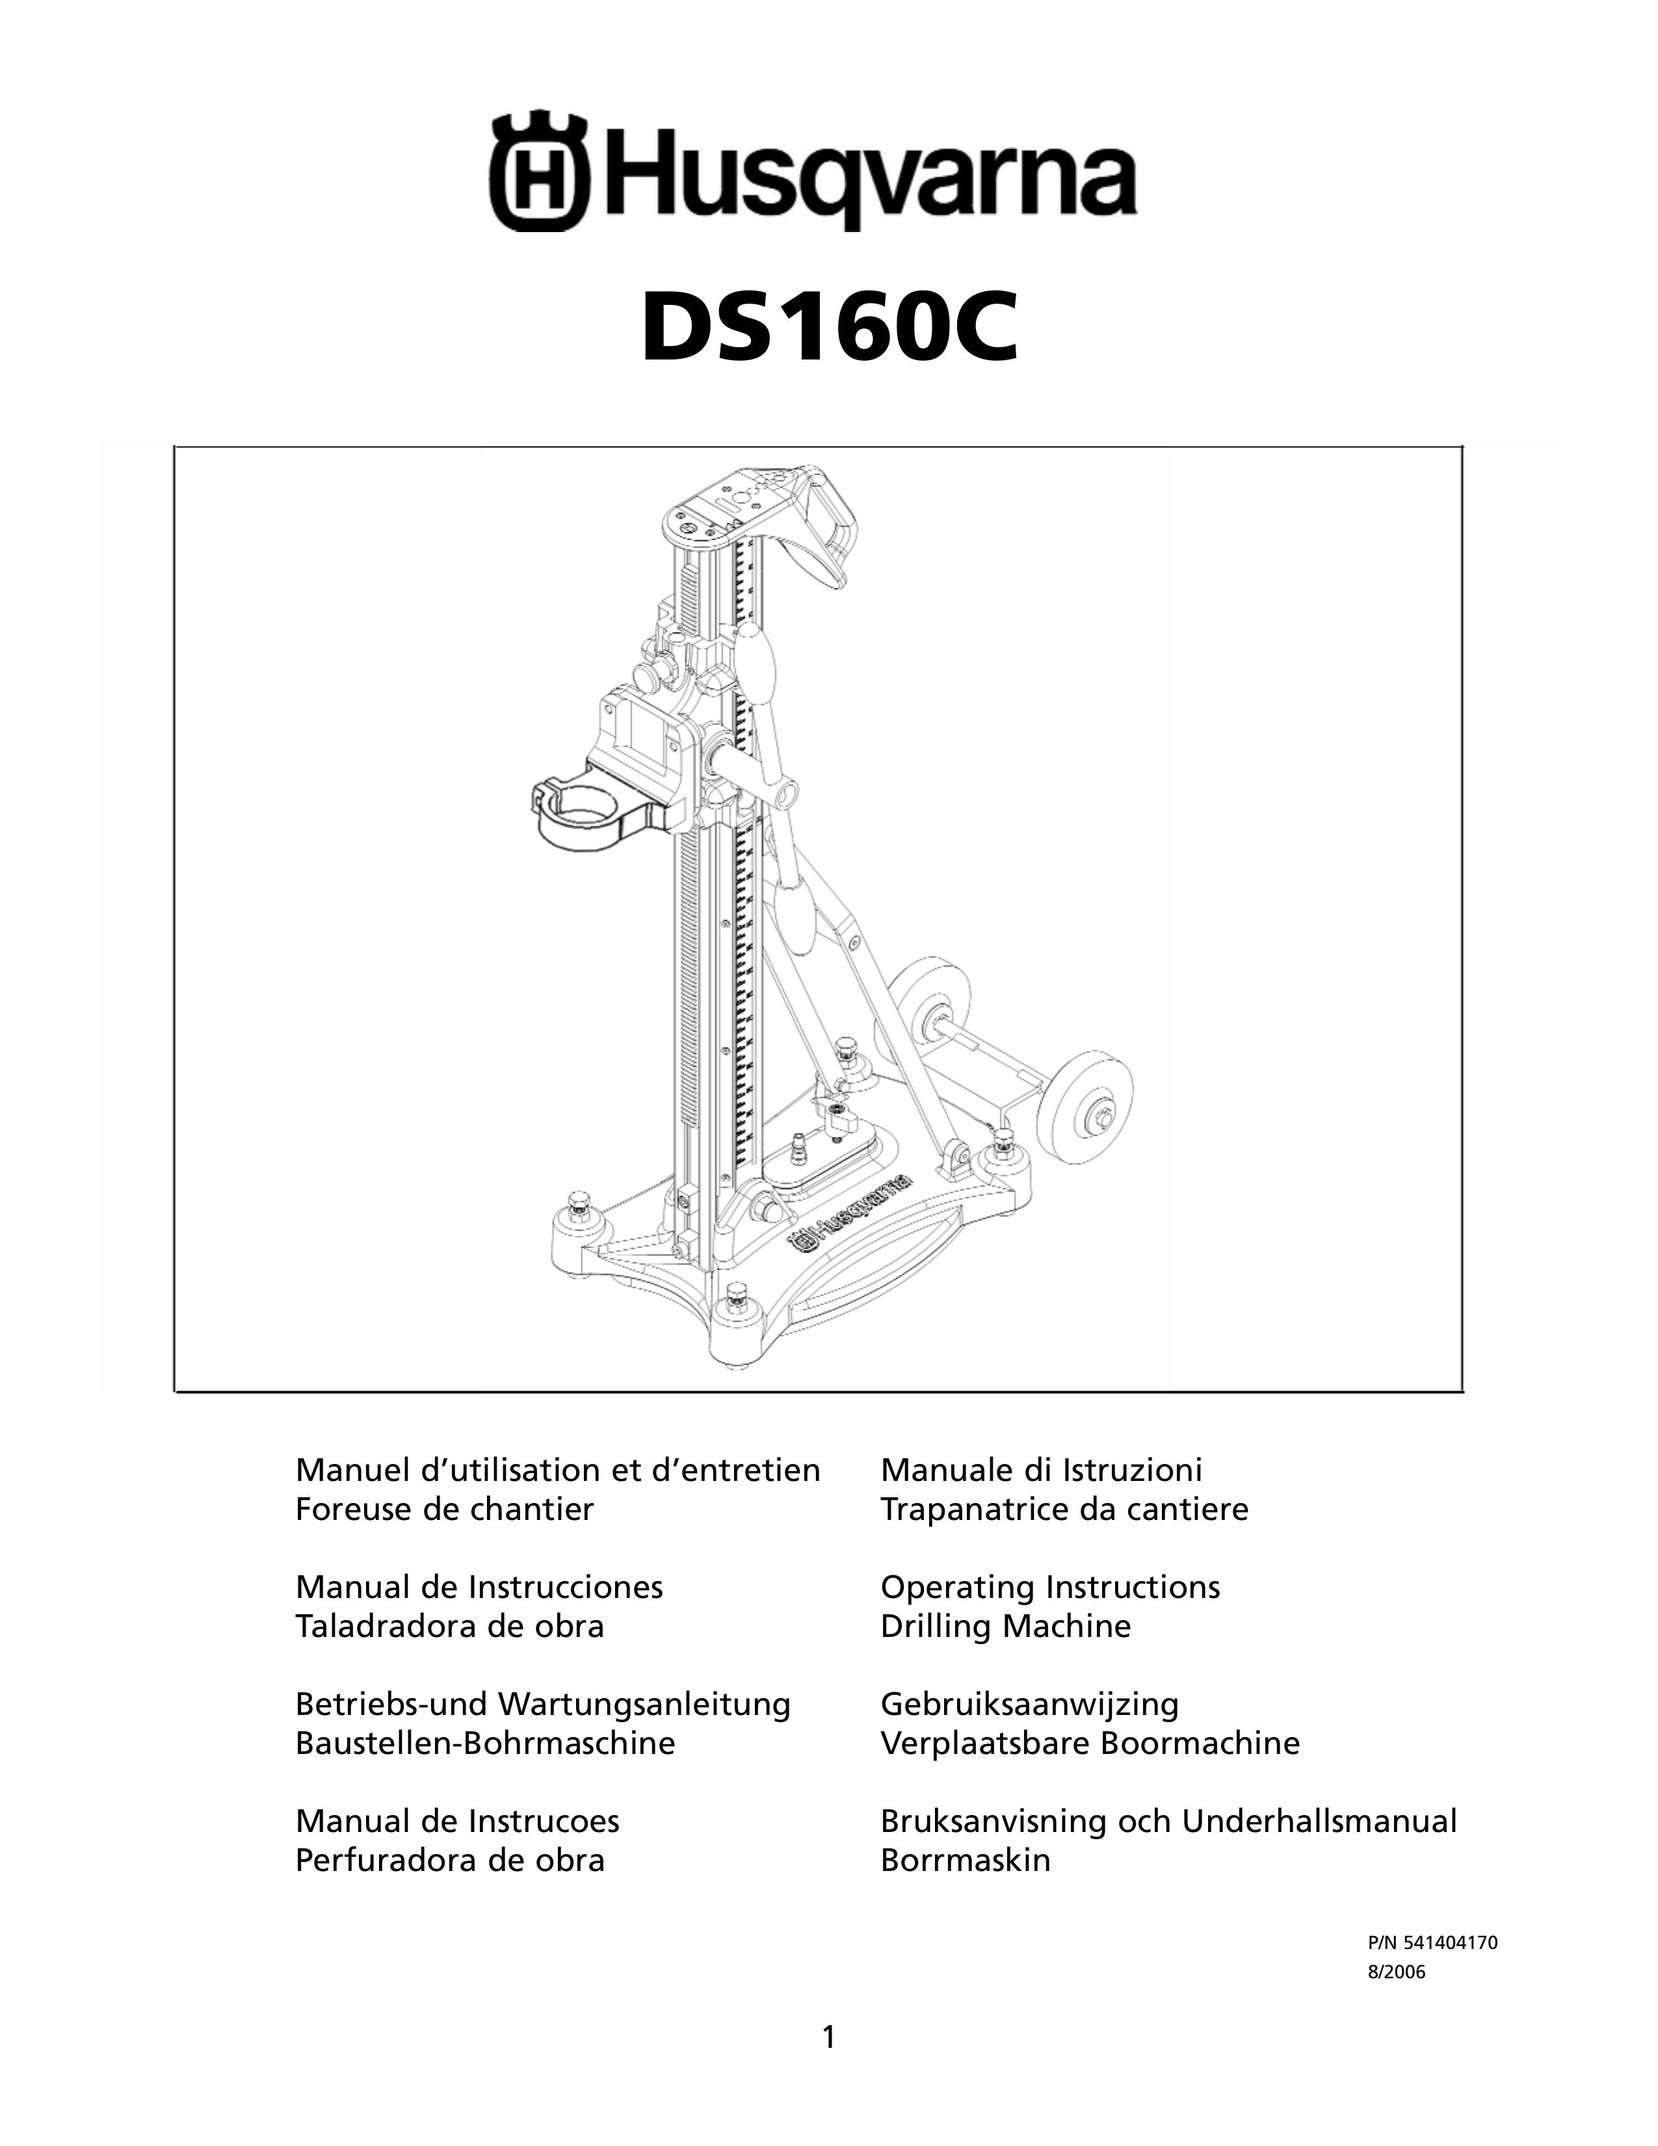 Husqvarna DS160C Cordless Drill User Manual